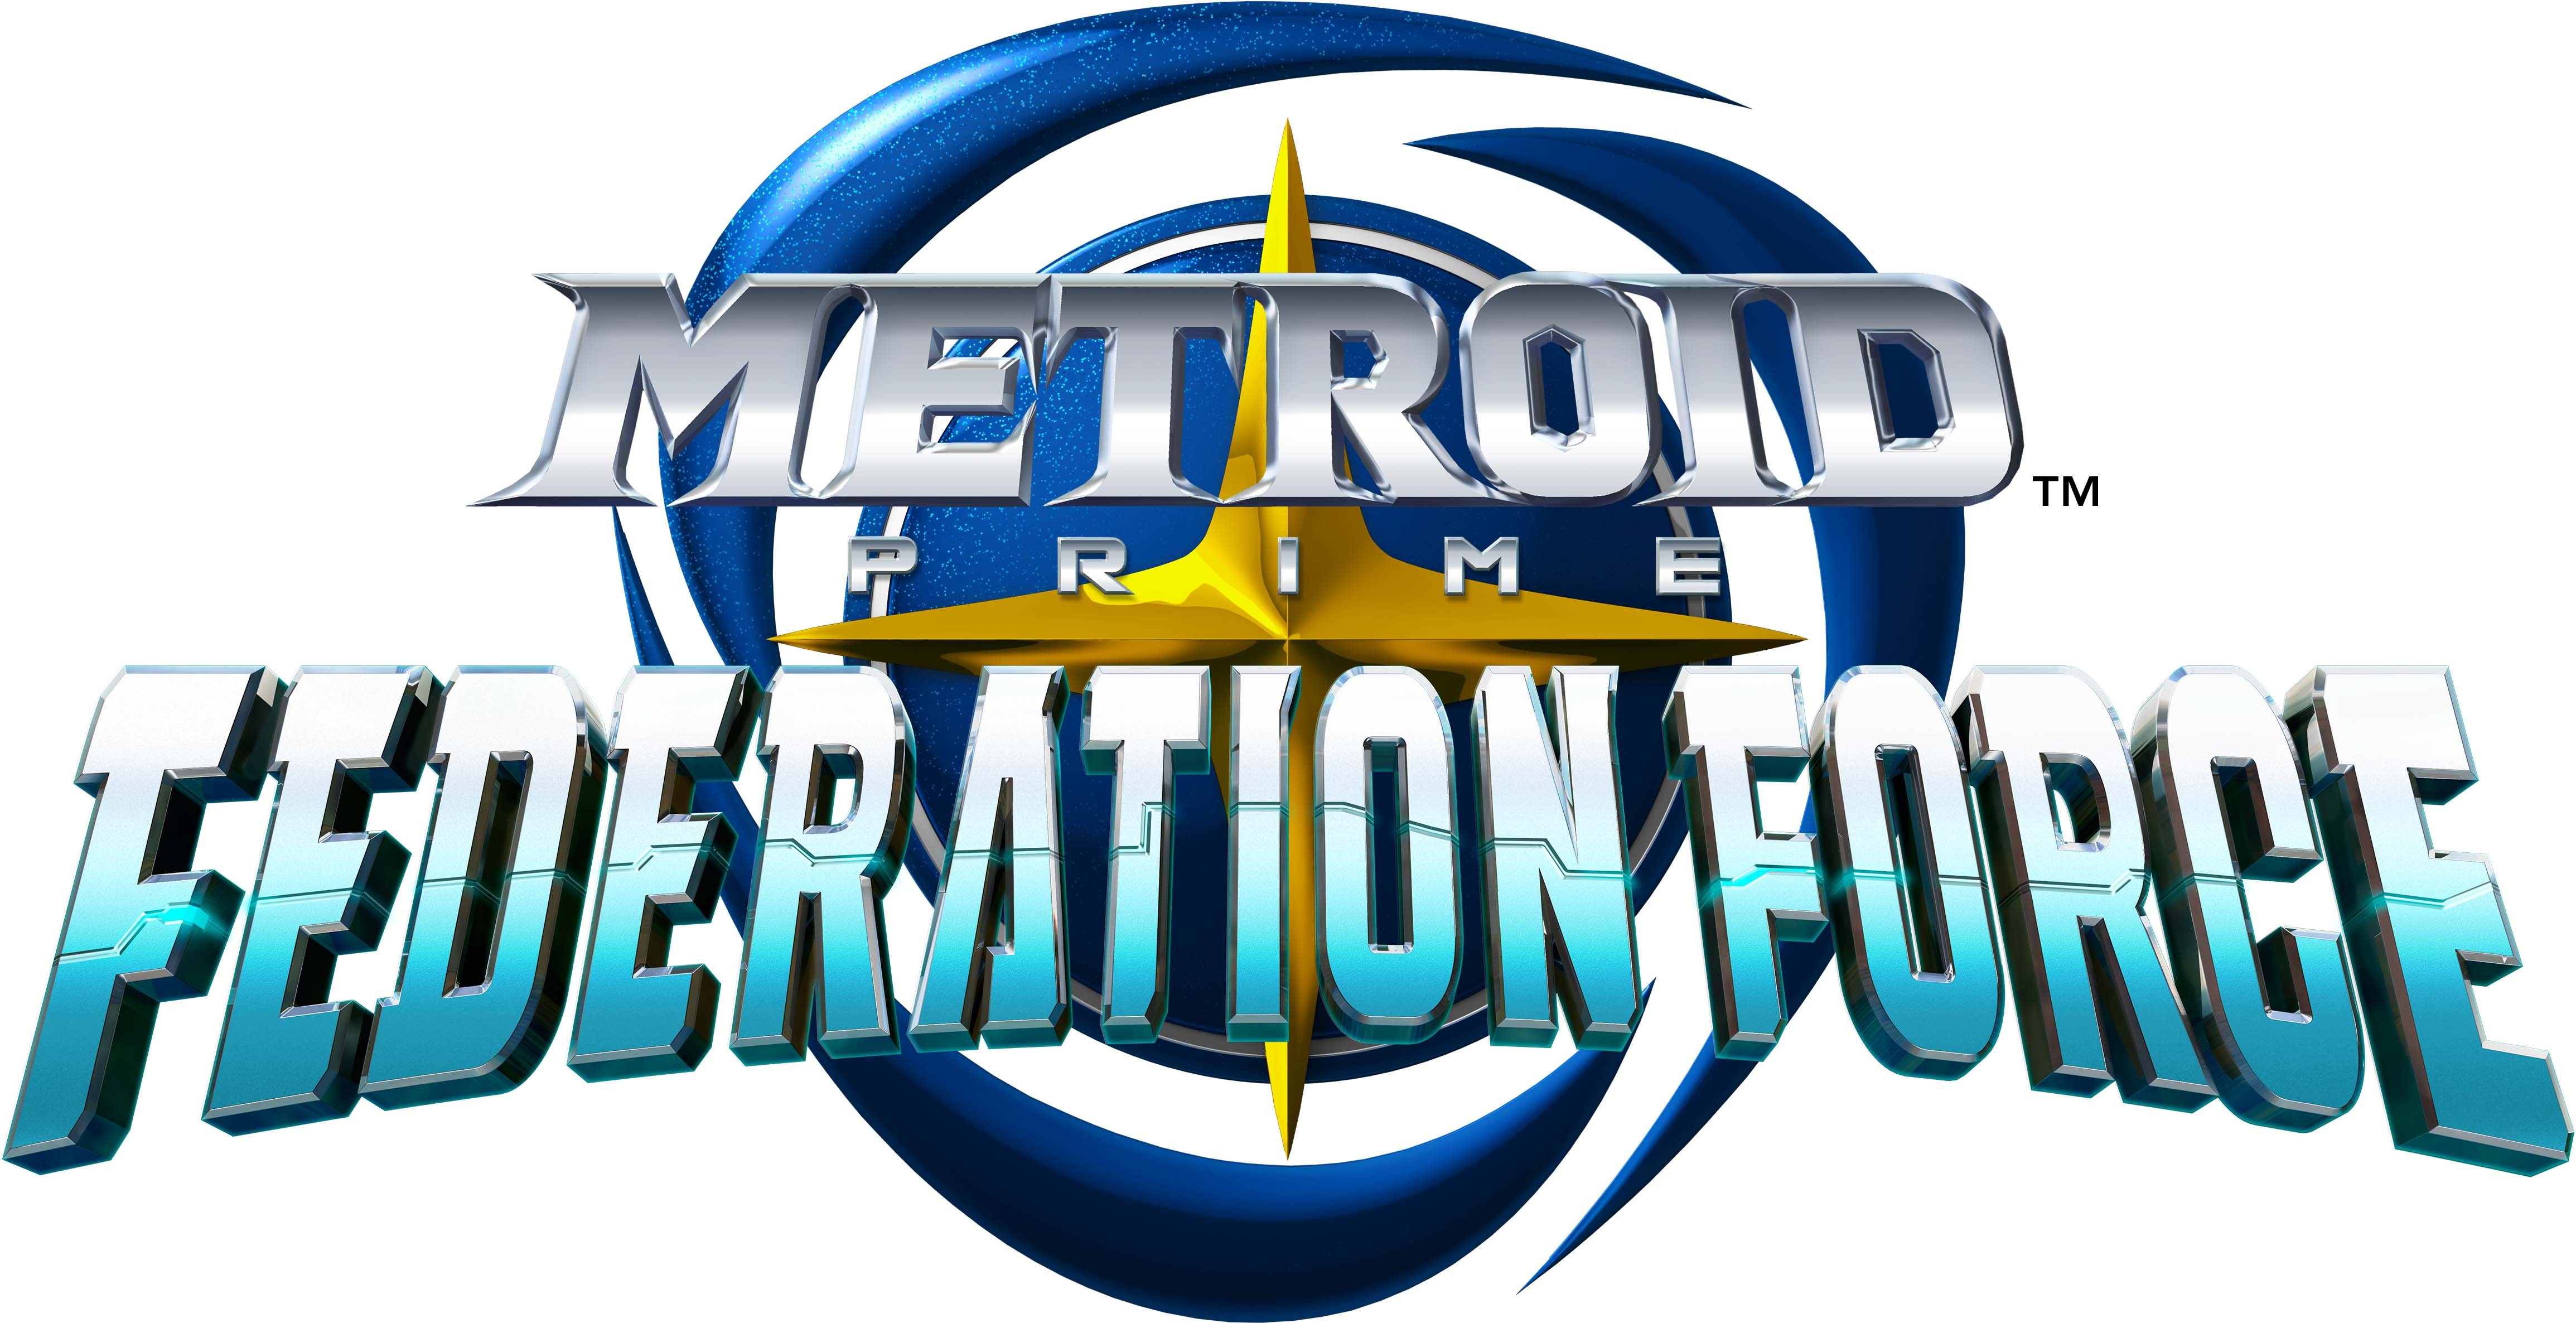 Metroid_Prime_Federation_Force.jpg